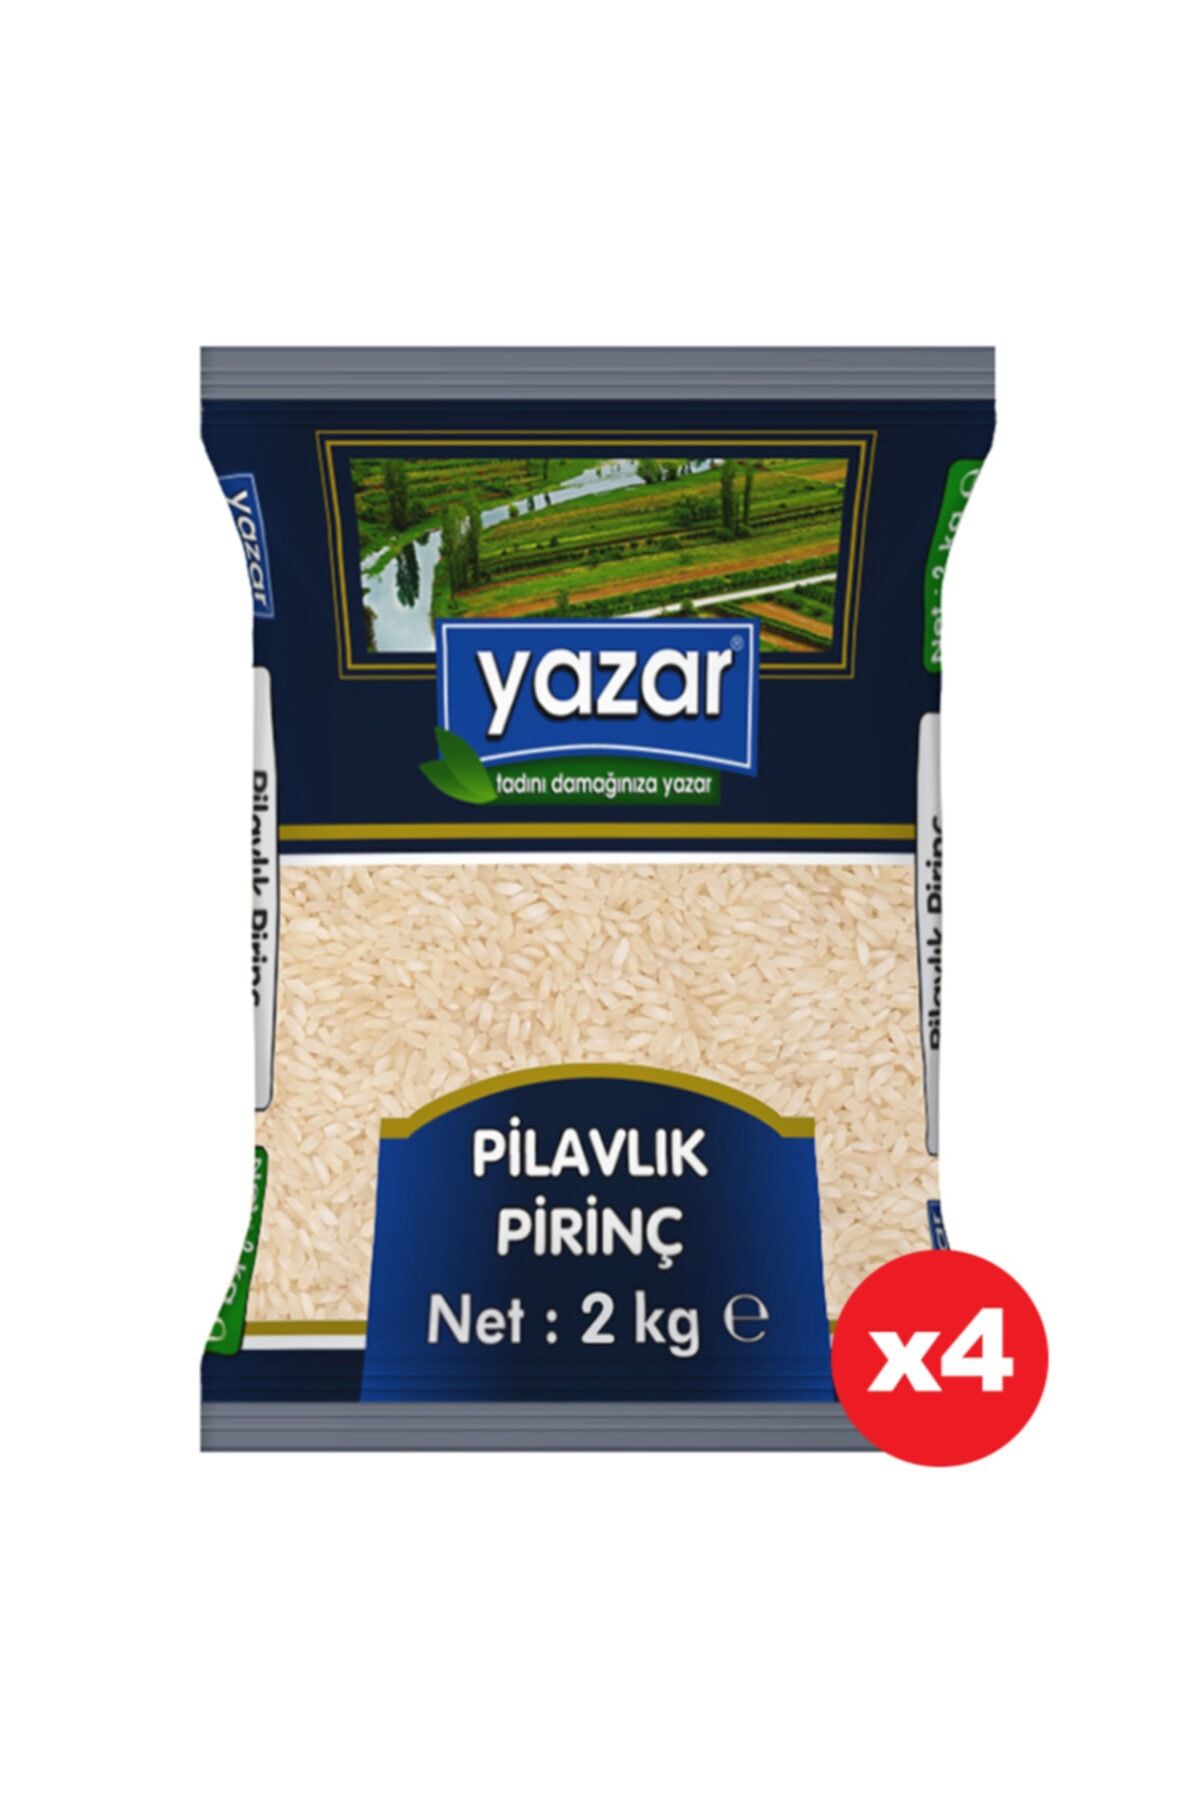 YAZAR Pilavlık Pirinç 2 Kg X 4 Paket